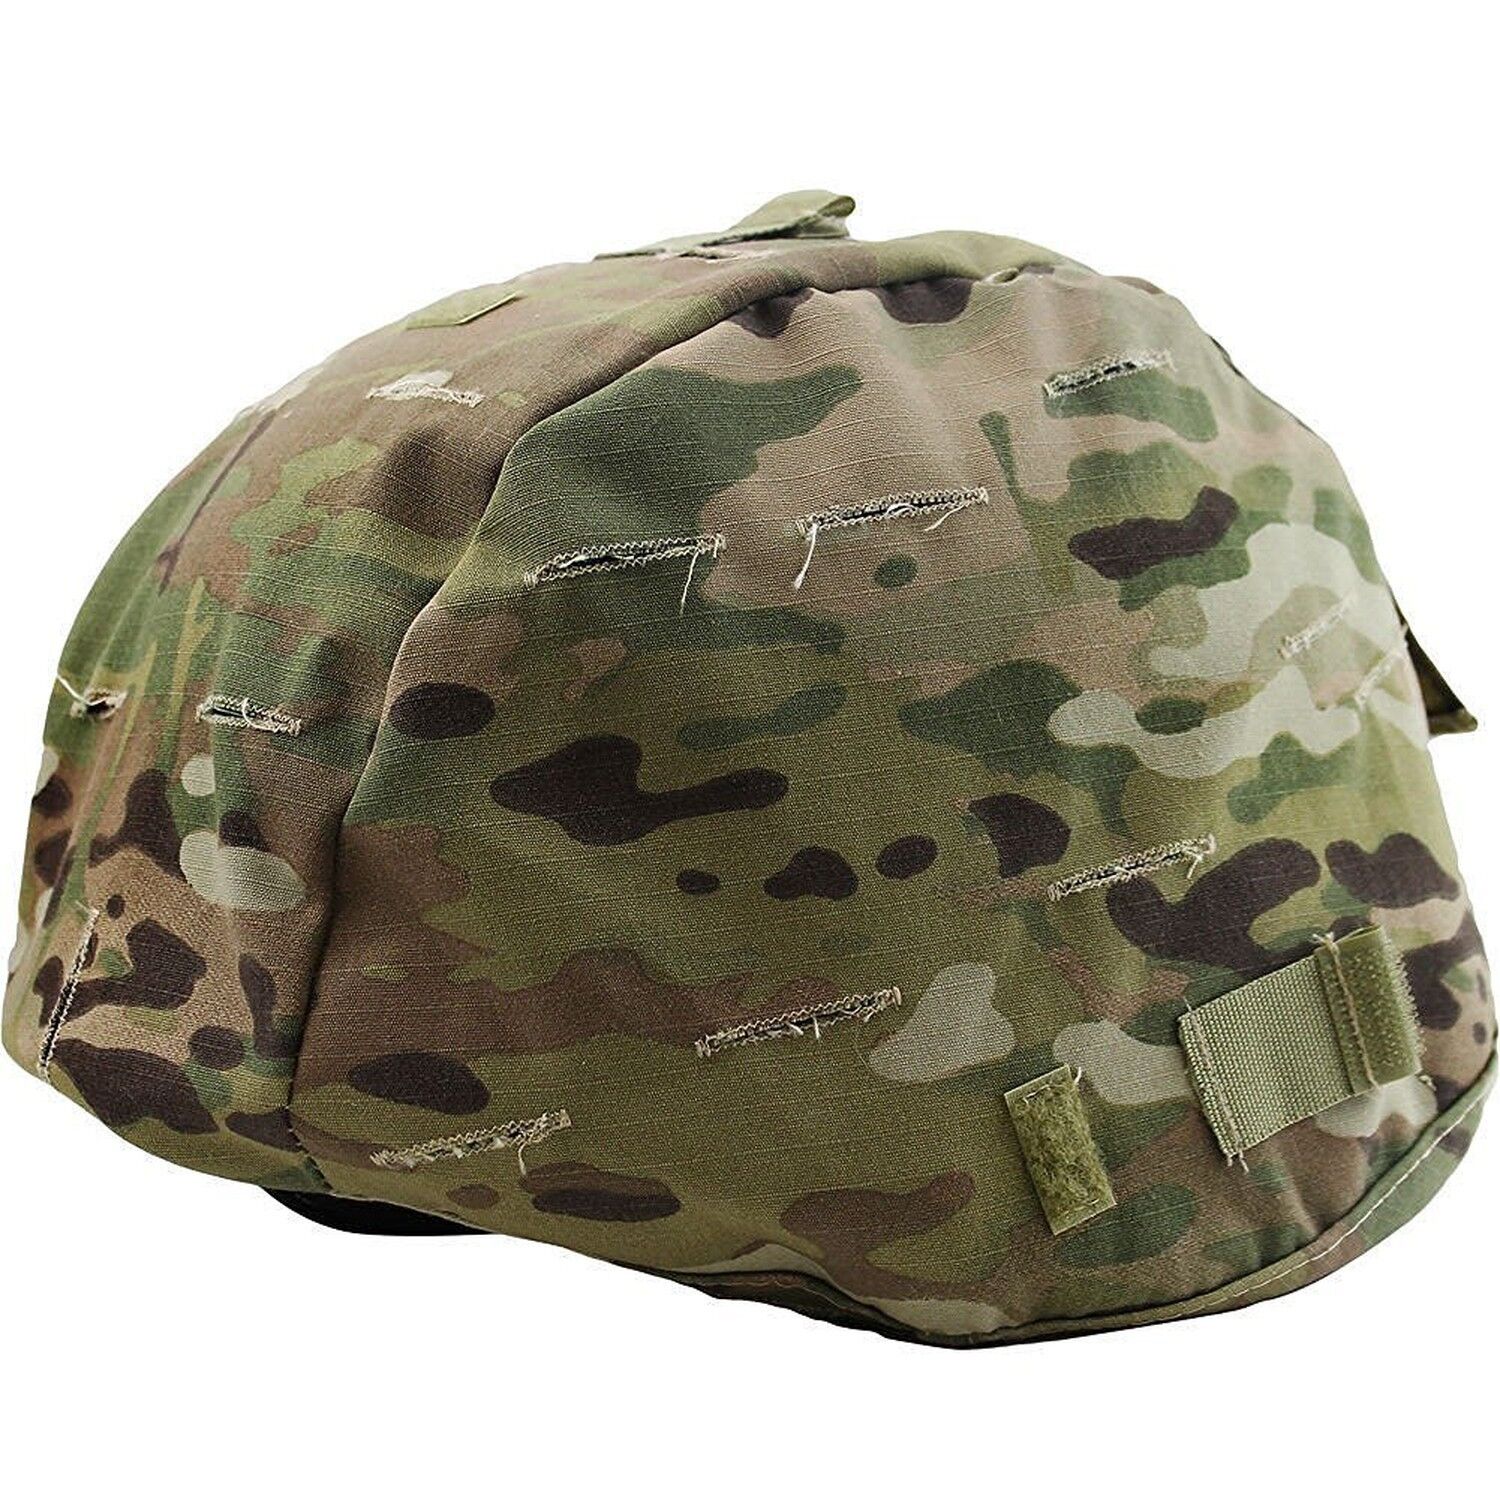 Military MICH/ACH Multicam Helmet Cover (S/M)